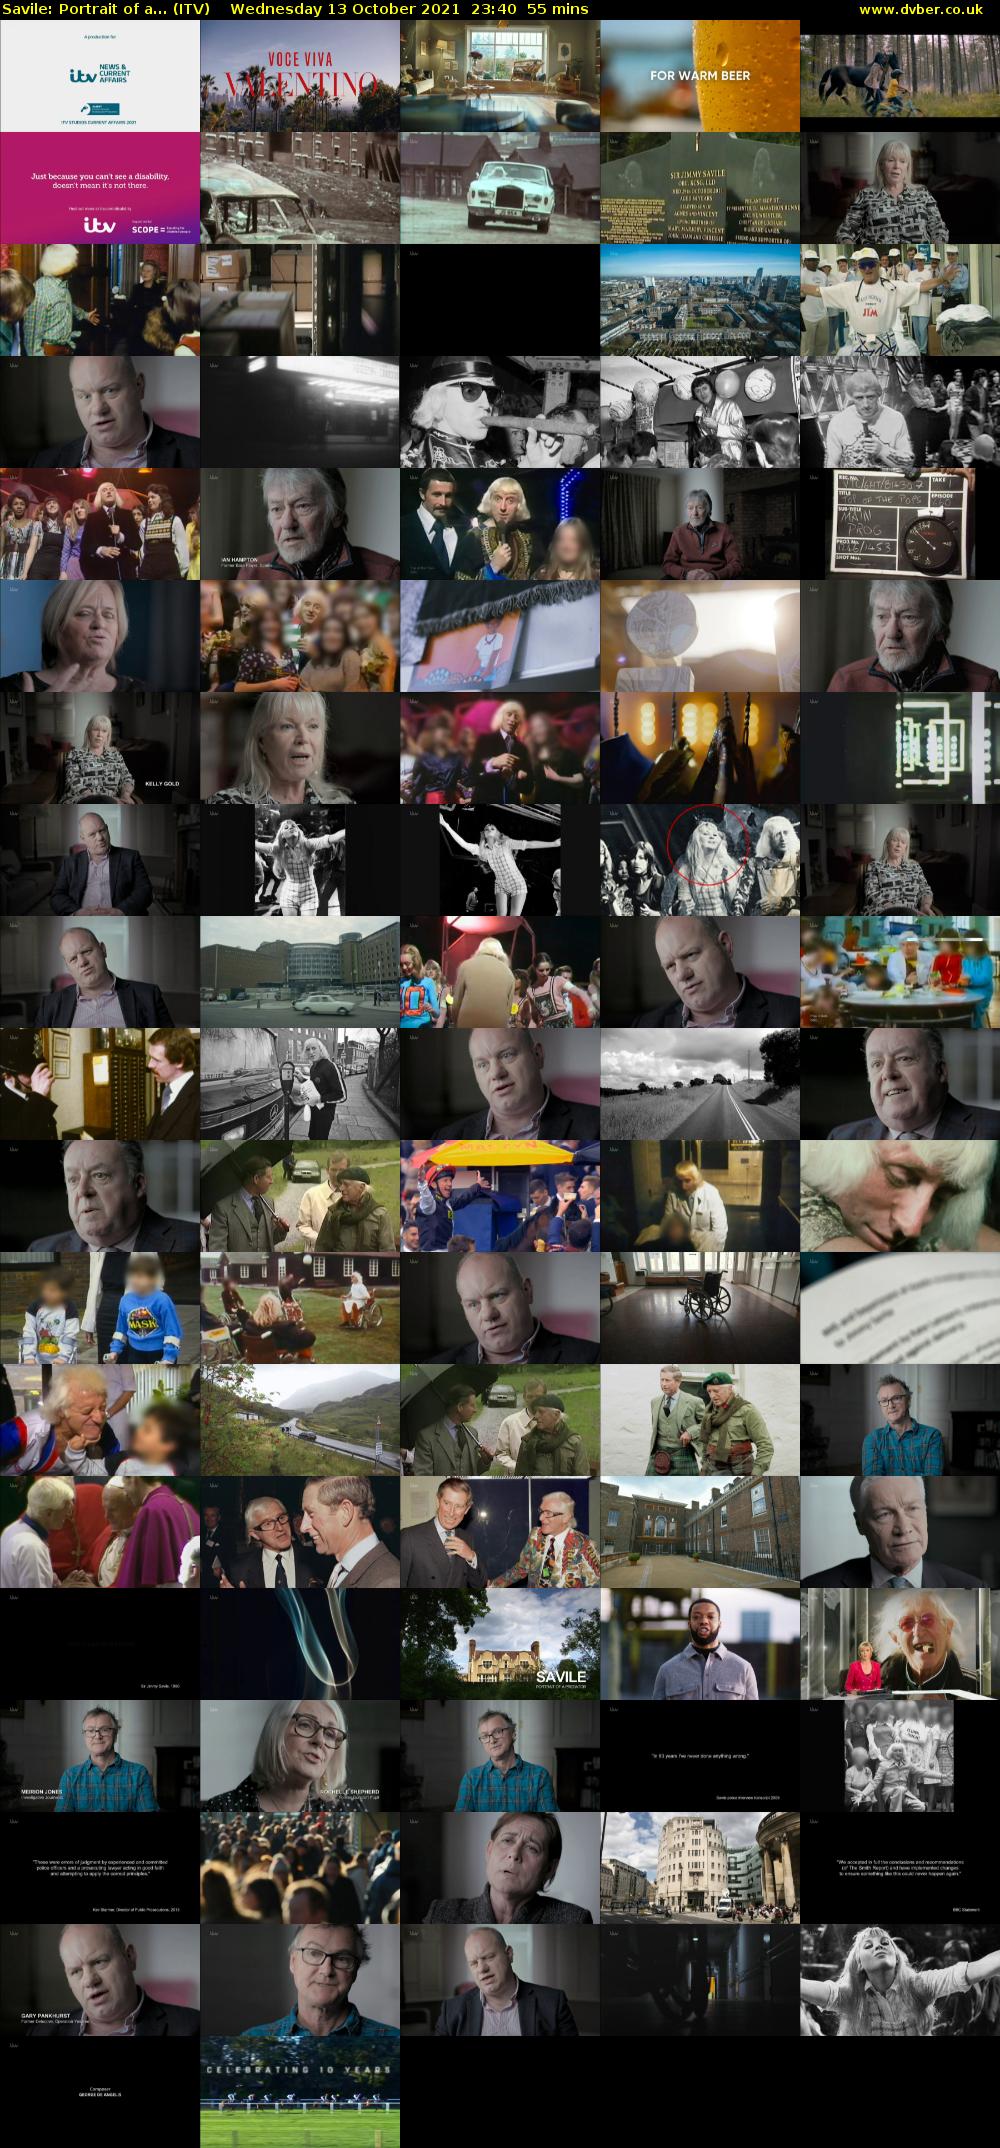 Savile: Portrait of a... (ITV) Wednesday 13 October 2021 23:40 - 00:35